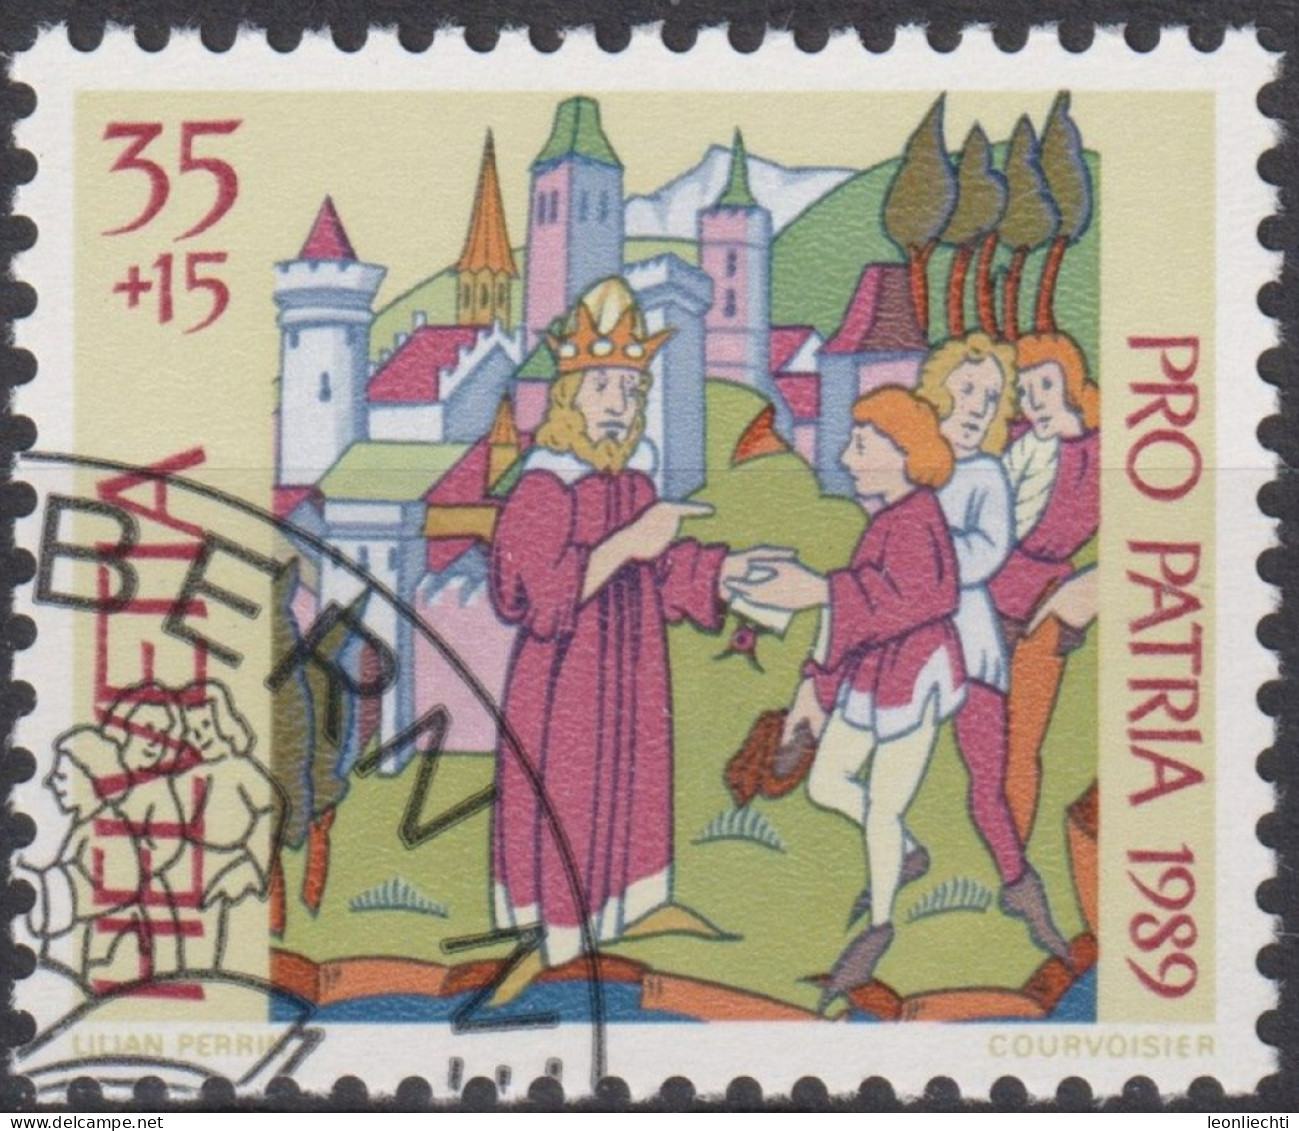 1989 Schweiz Pro Patria, Bilderchronik, Tschachtlan-Chronik 1470 ⵙ Zum:CH B223, Mi:CH 1393, Yt: CH 1319 - Used Stamps